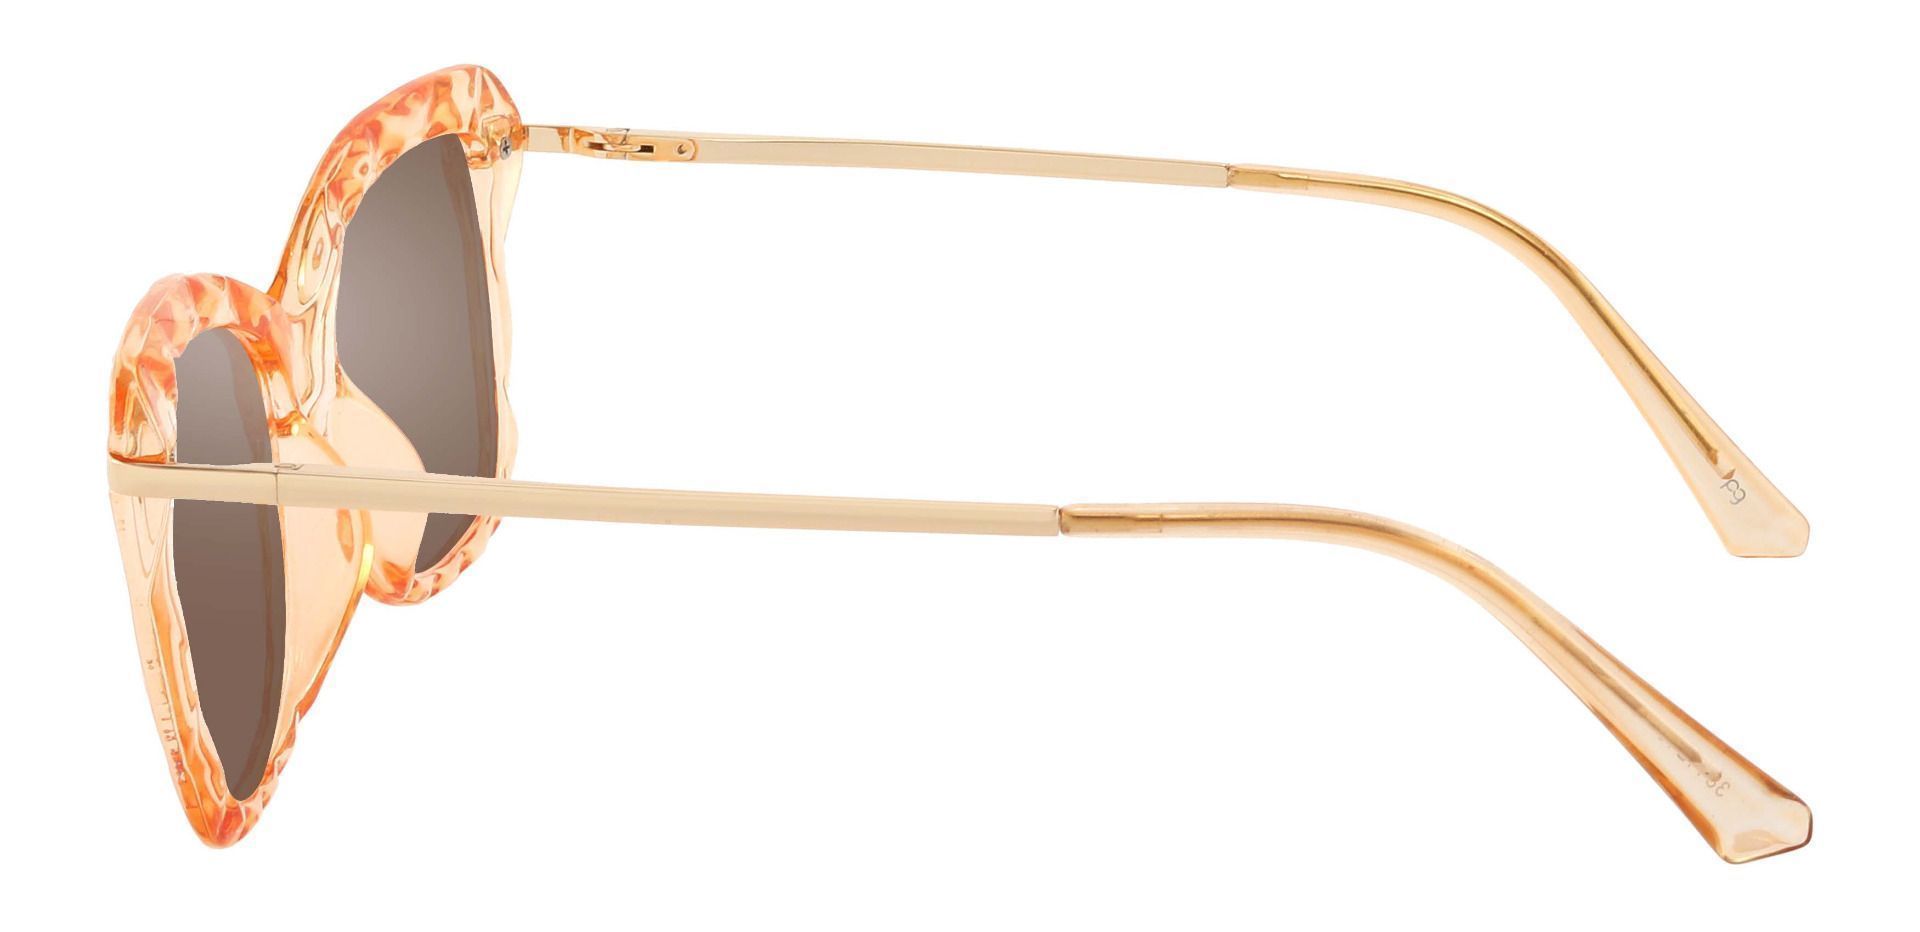 Shoshanna Rectangle Prescription Sunglasses - Brown Frame With Brown Lenses